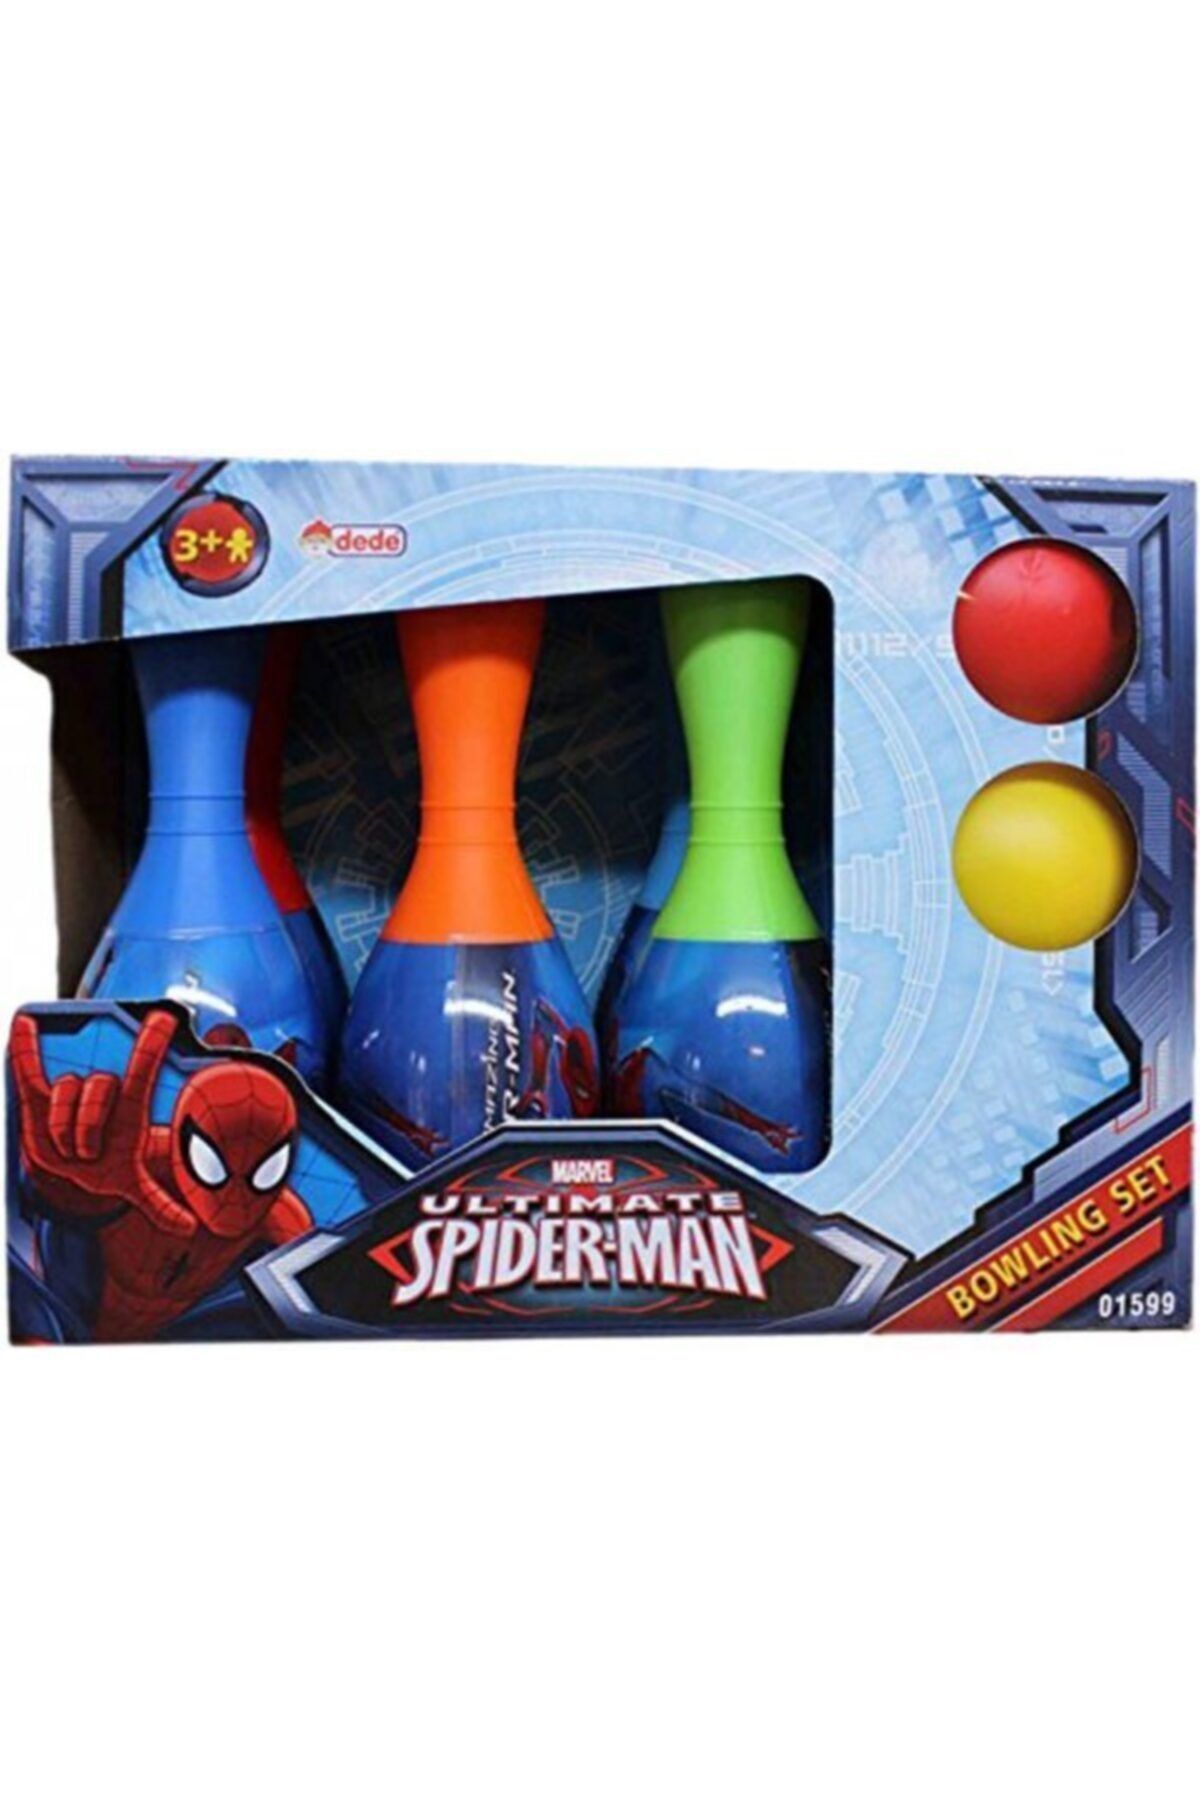 DEDE Oyuncak Spiderman Bowling Seti 01599